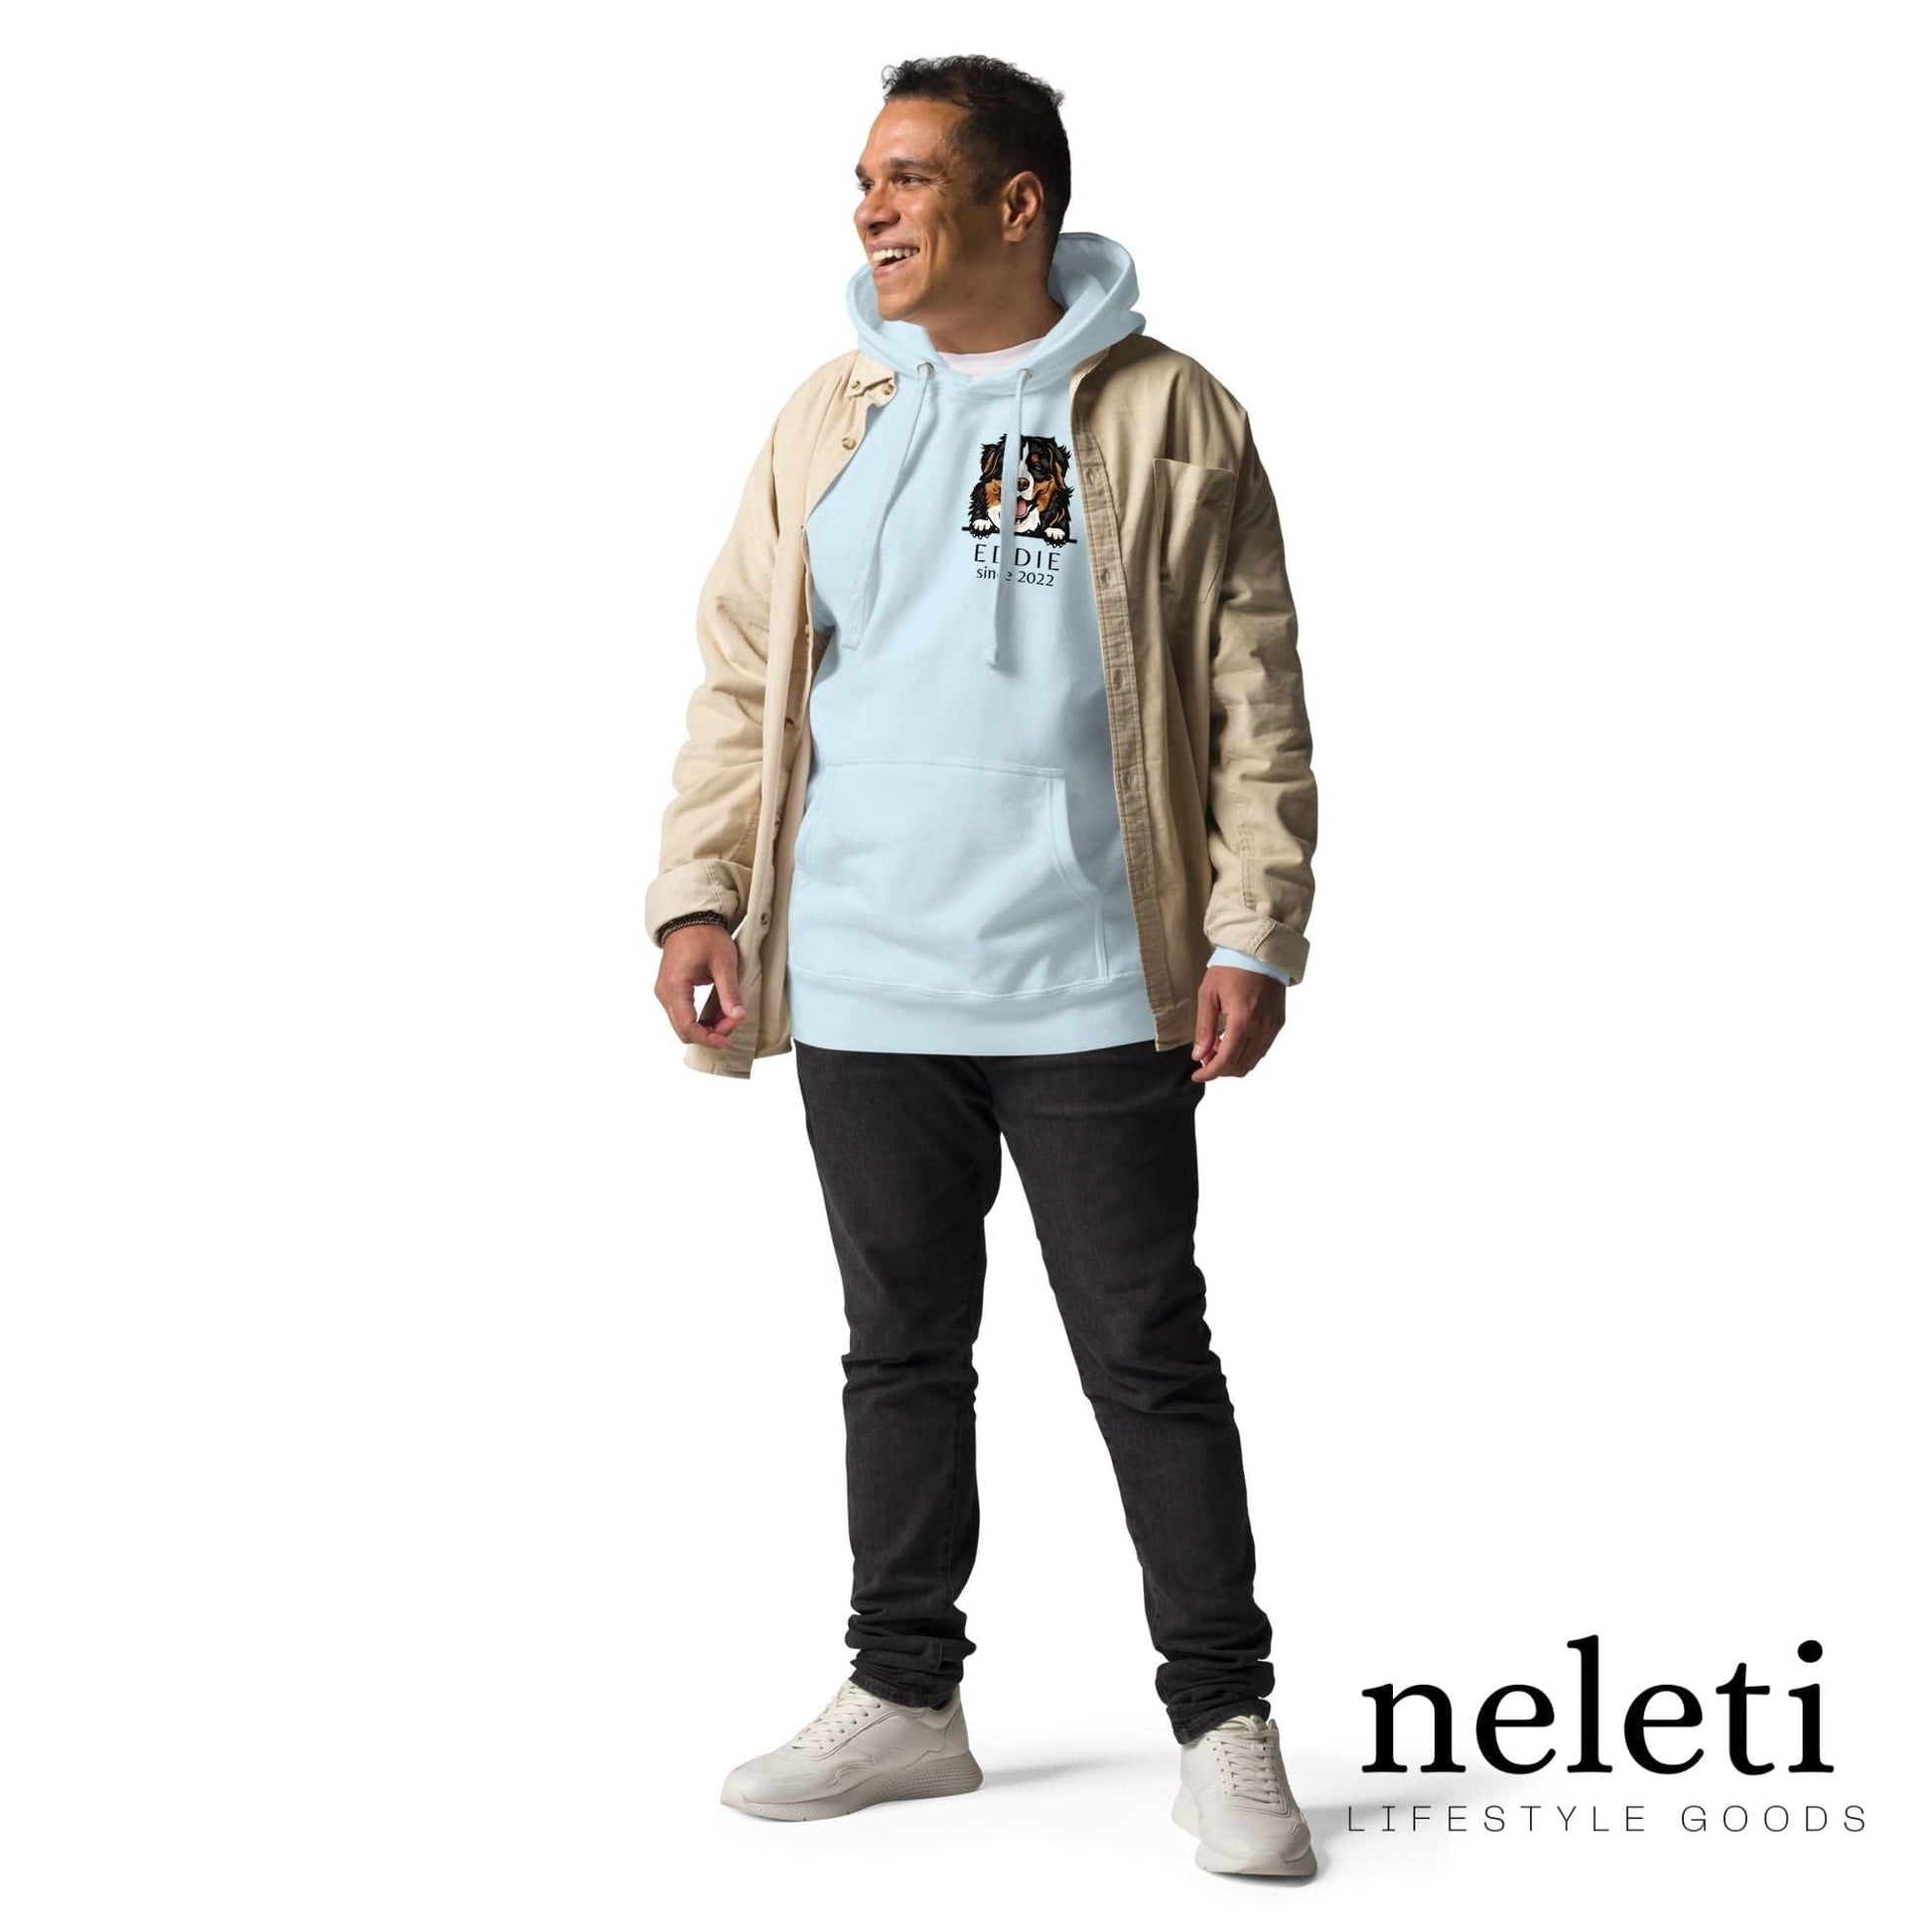 neleti.com-custom-light-blue-hoodie-for-dog-lovers